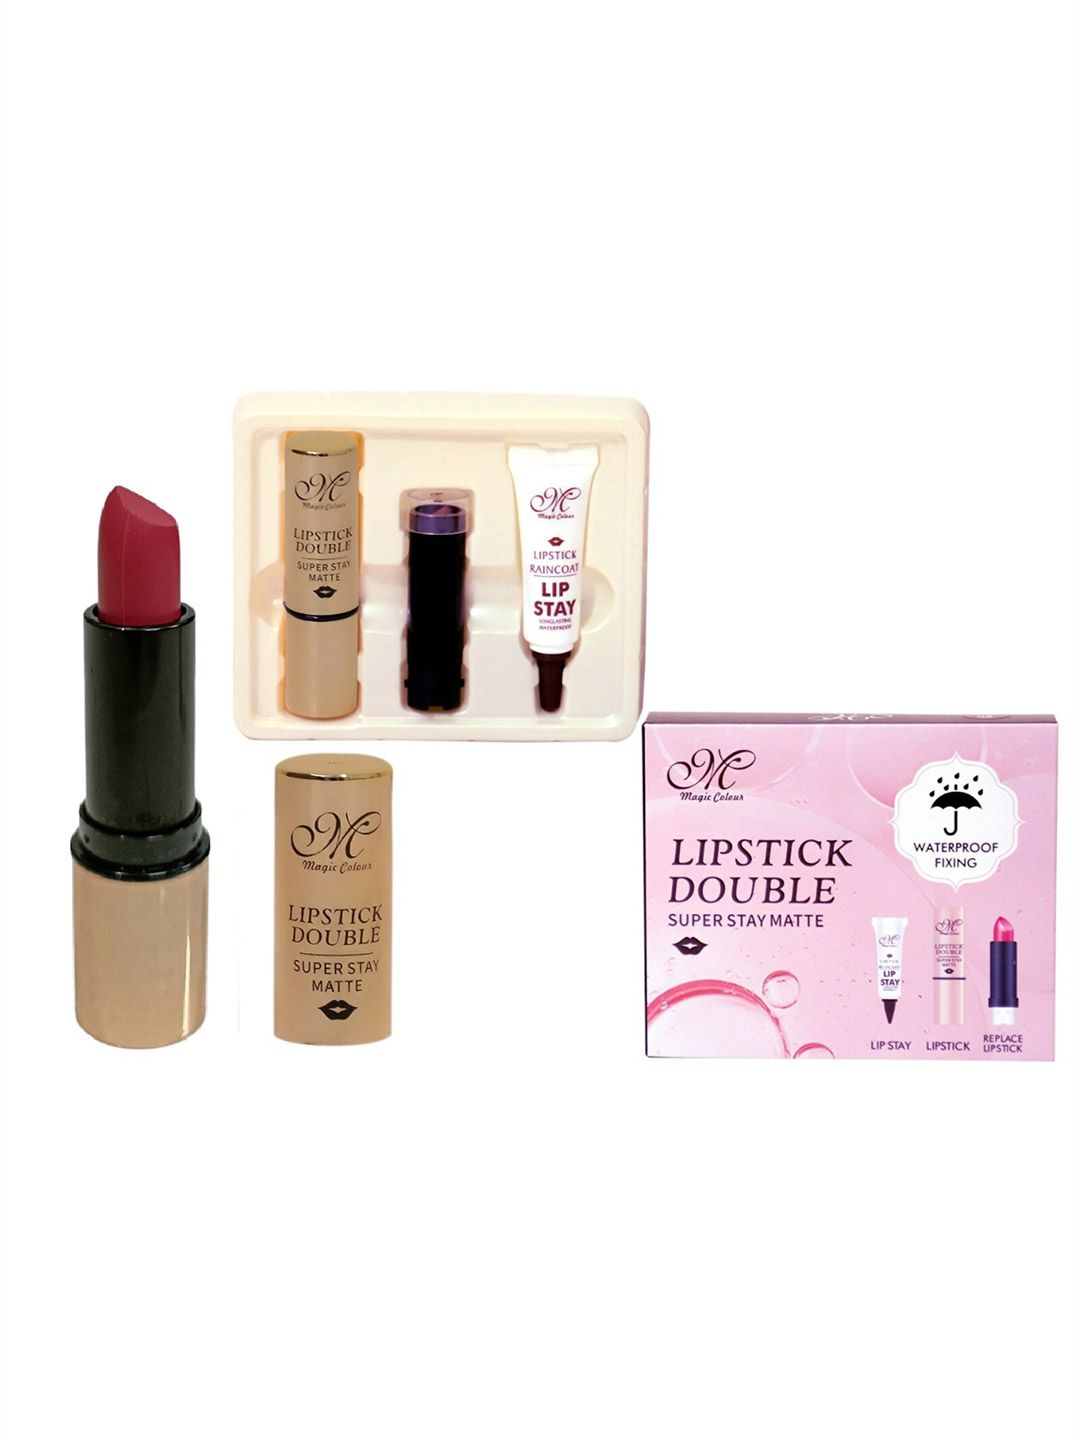 Magic  Colour Transfer Proof Lipstick Double Kit (2 Lipsticks + 1 Lip Stay Gel, Magenta Haze)15.6gm Price in India